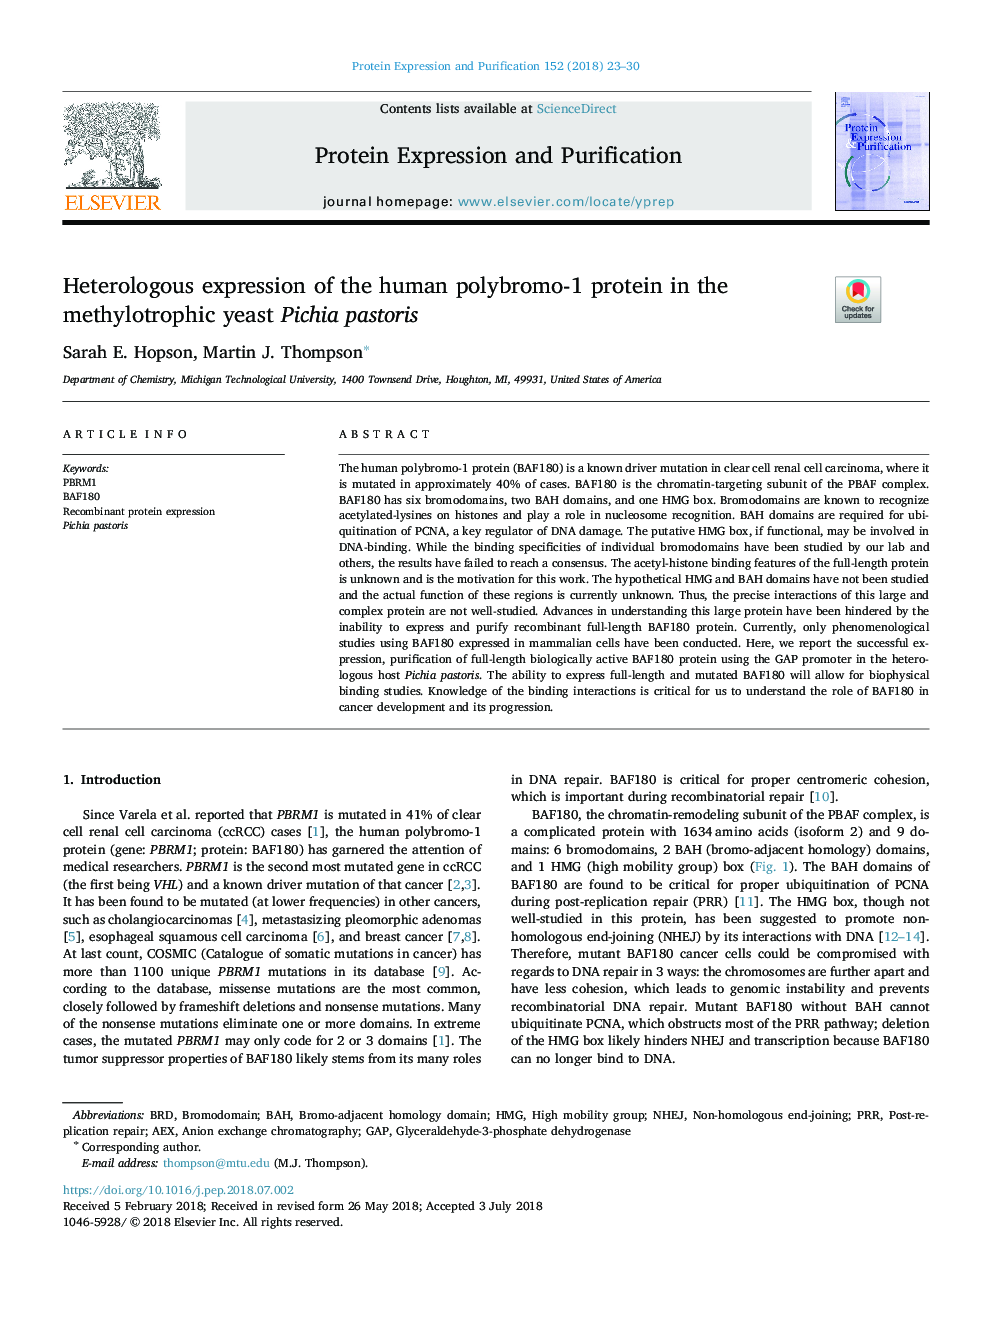 Heterologous expression of the human polybromo-1 protein in the methylotrophic yeast Pichia pastoris